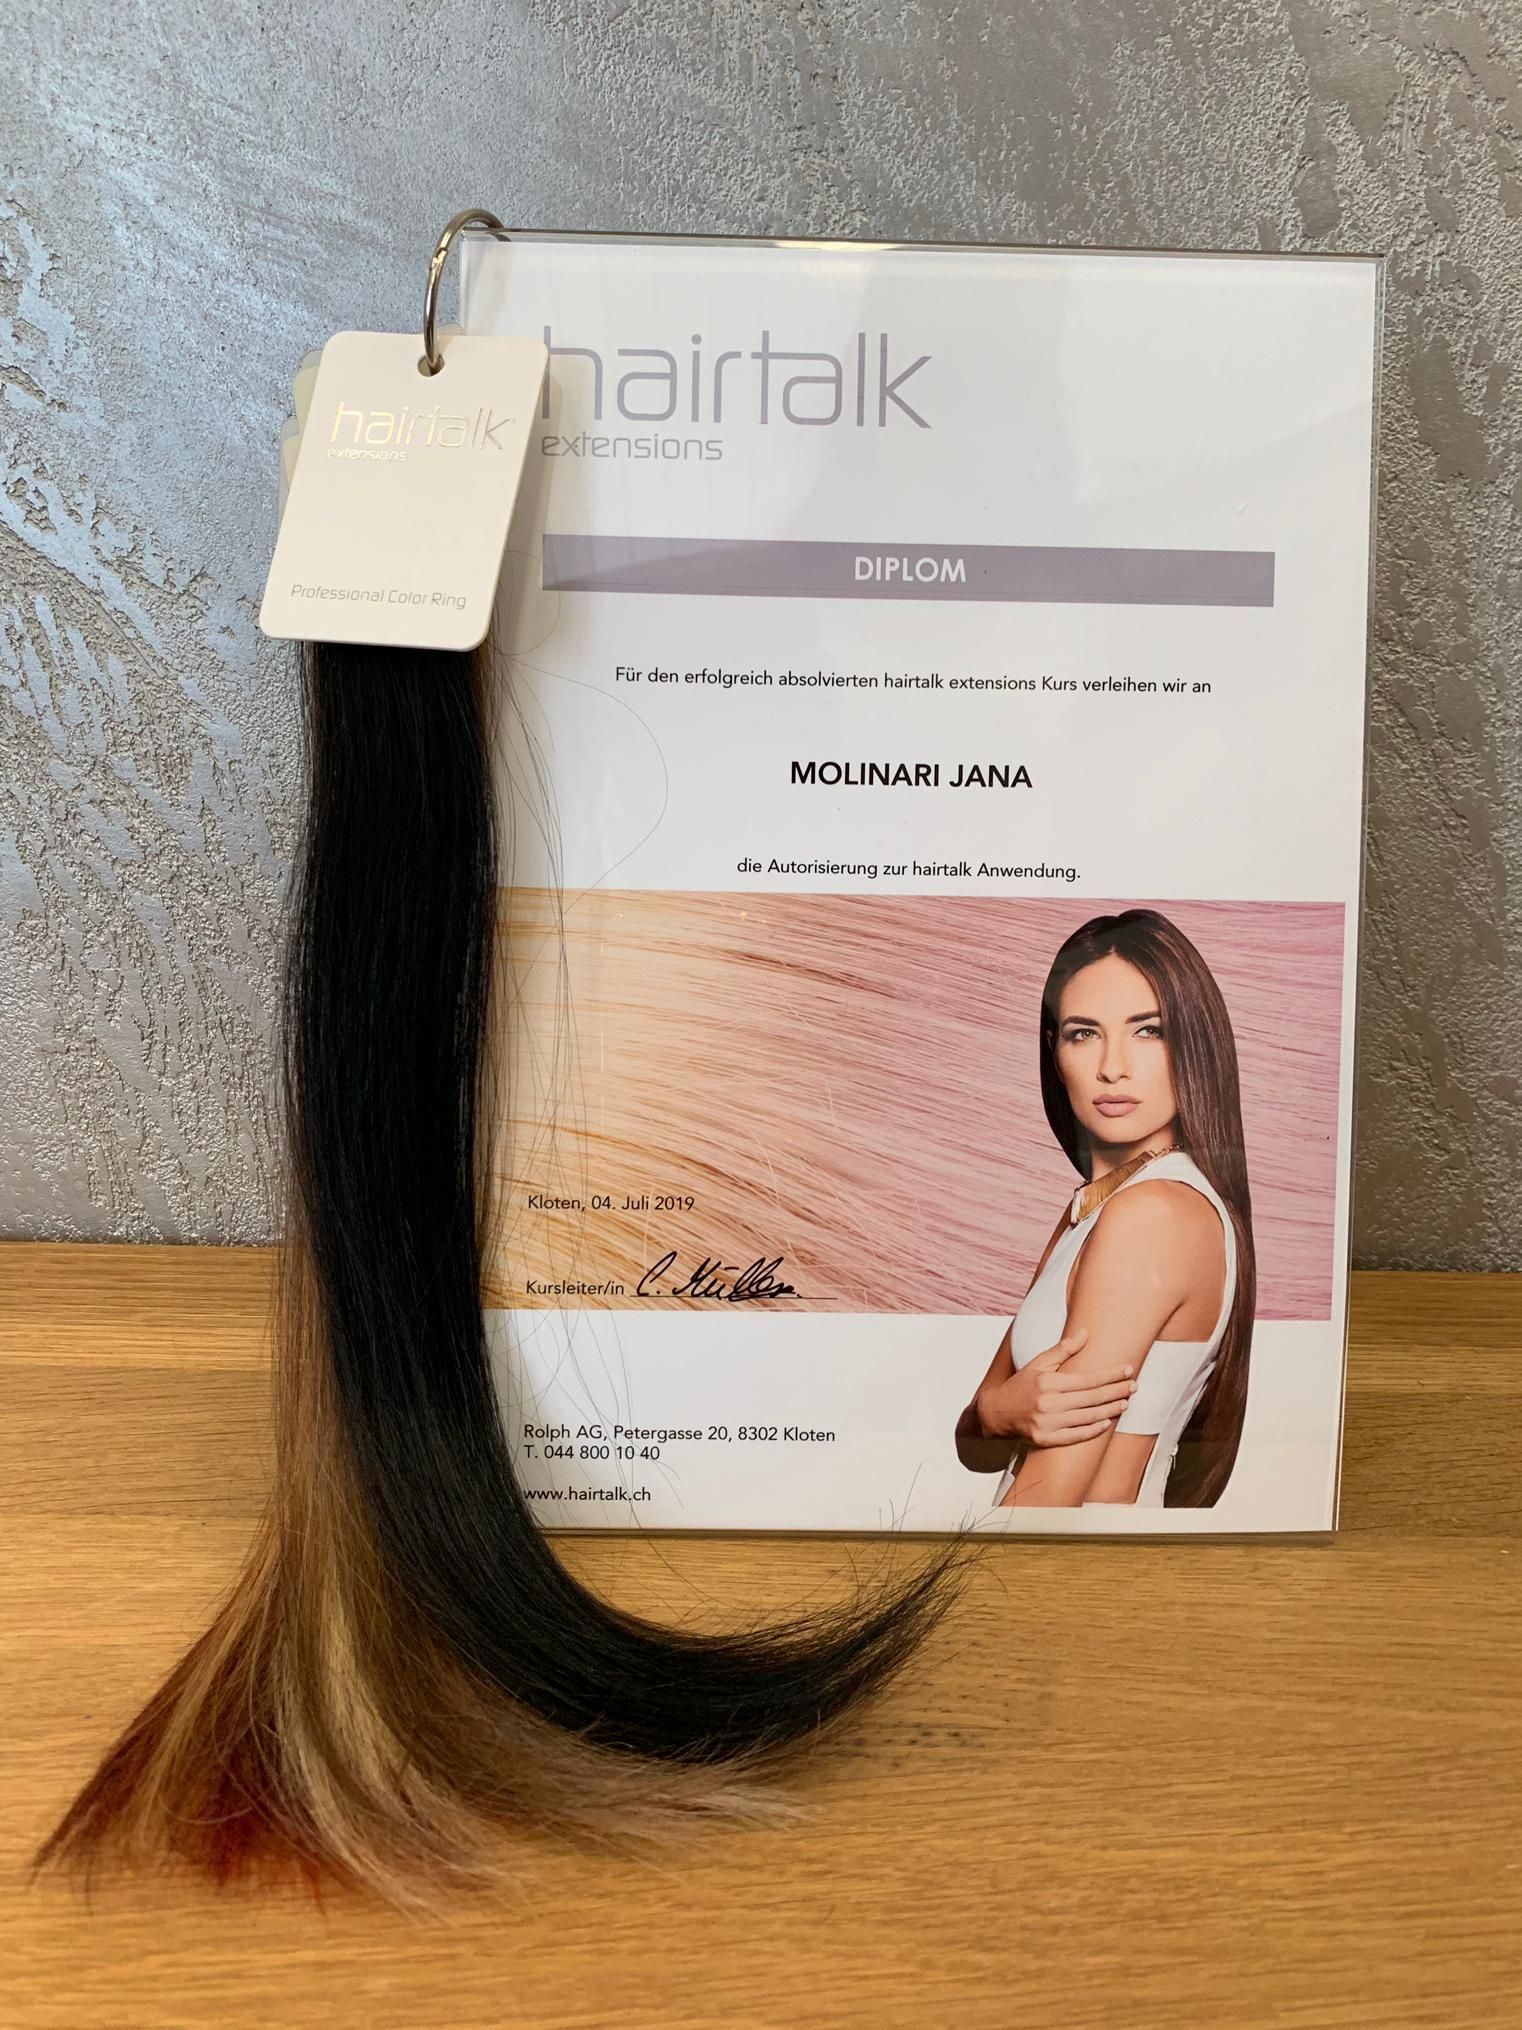 Hairtalk Extensions, 04.07.19 - Coiffure Birrer